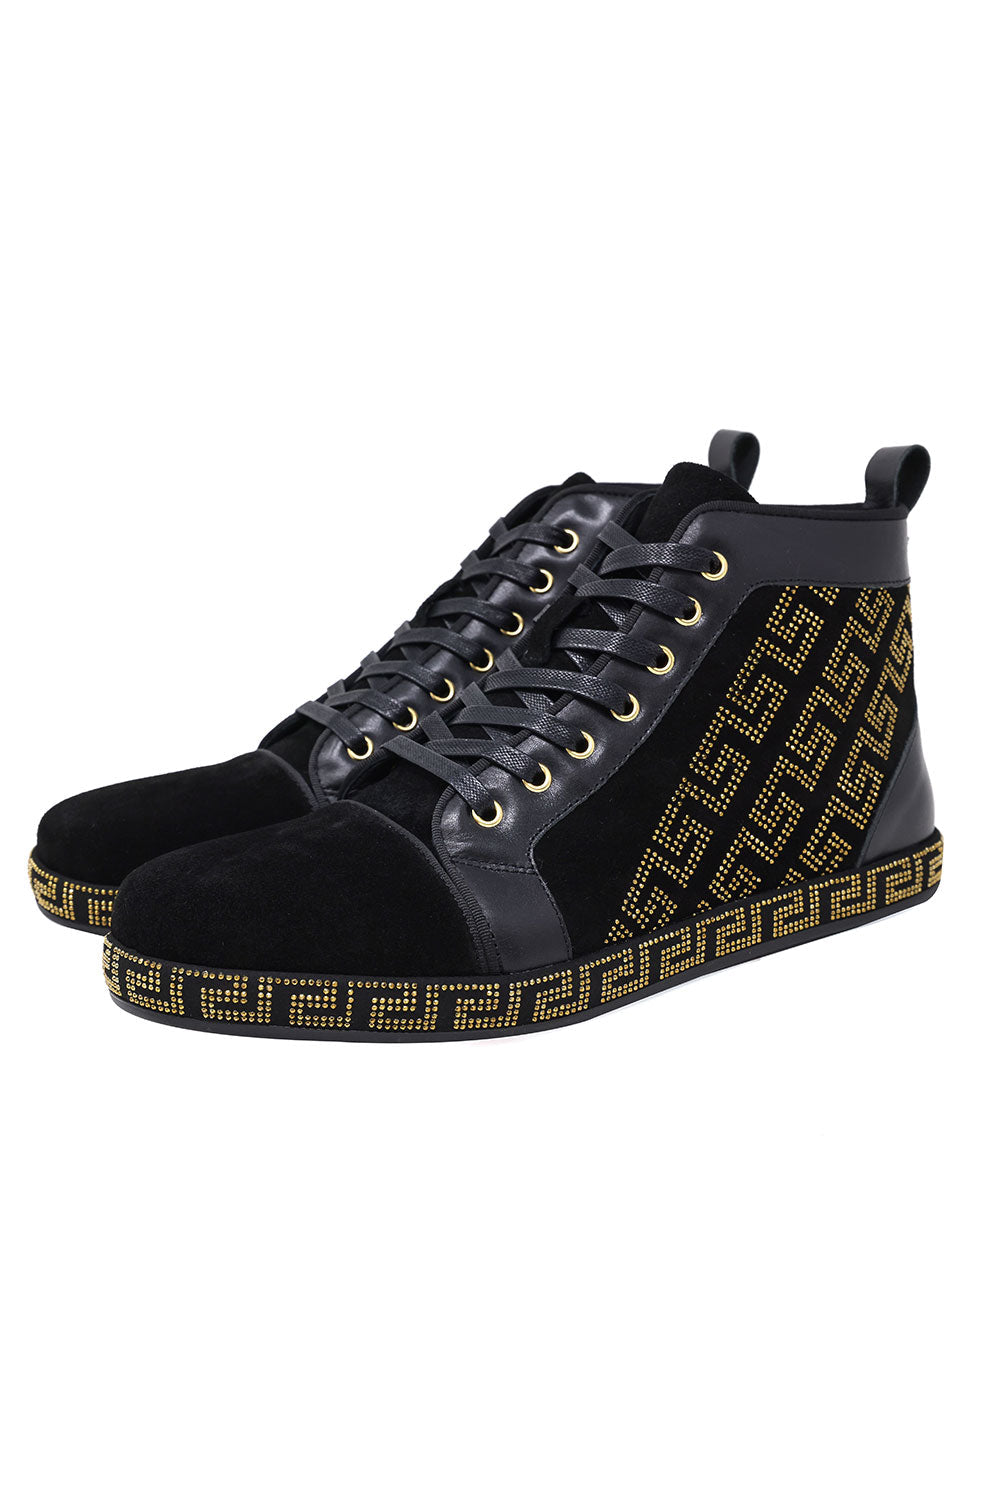 Barabas Men's Rhinestone Greek Pattern Design High Top Sneakers SH729 Black Gold